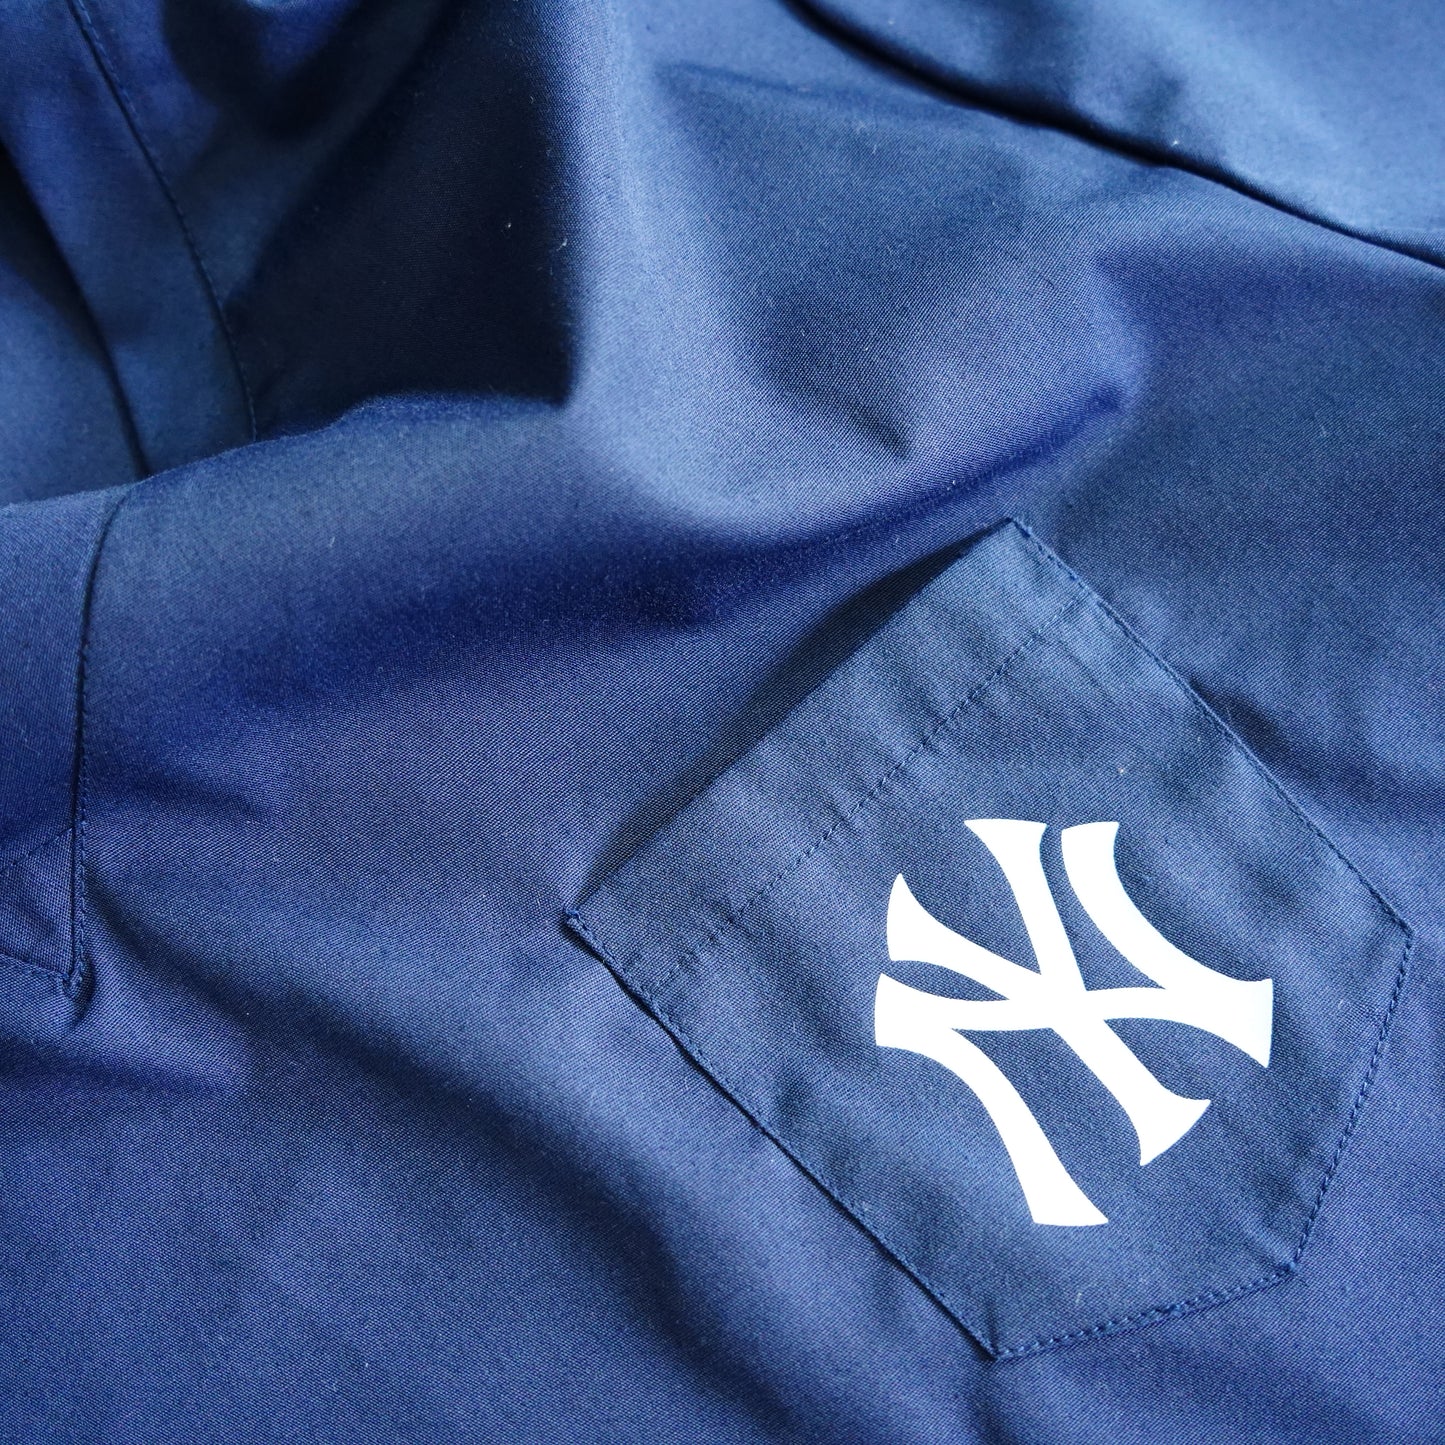 New York Yankees "Medical" Uniform